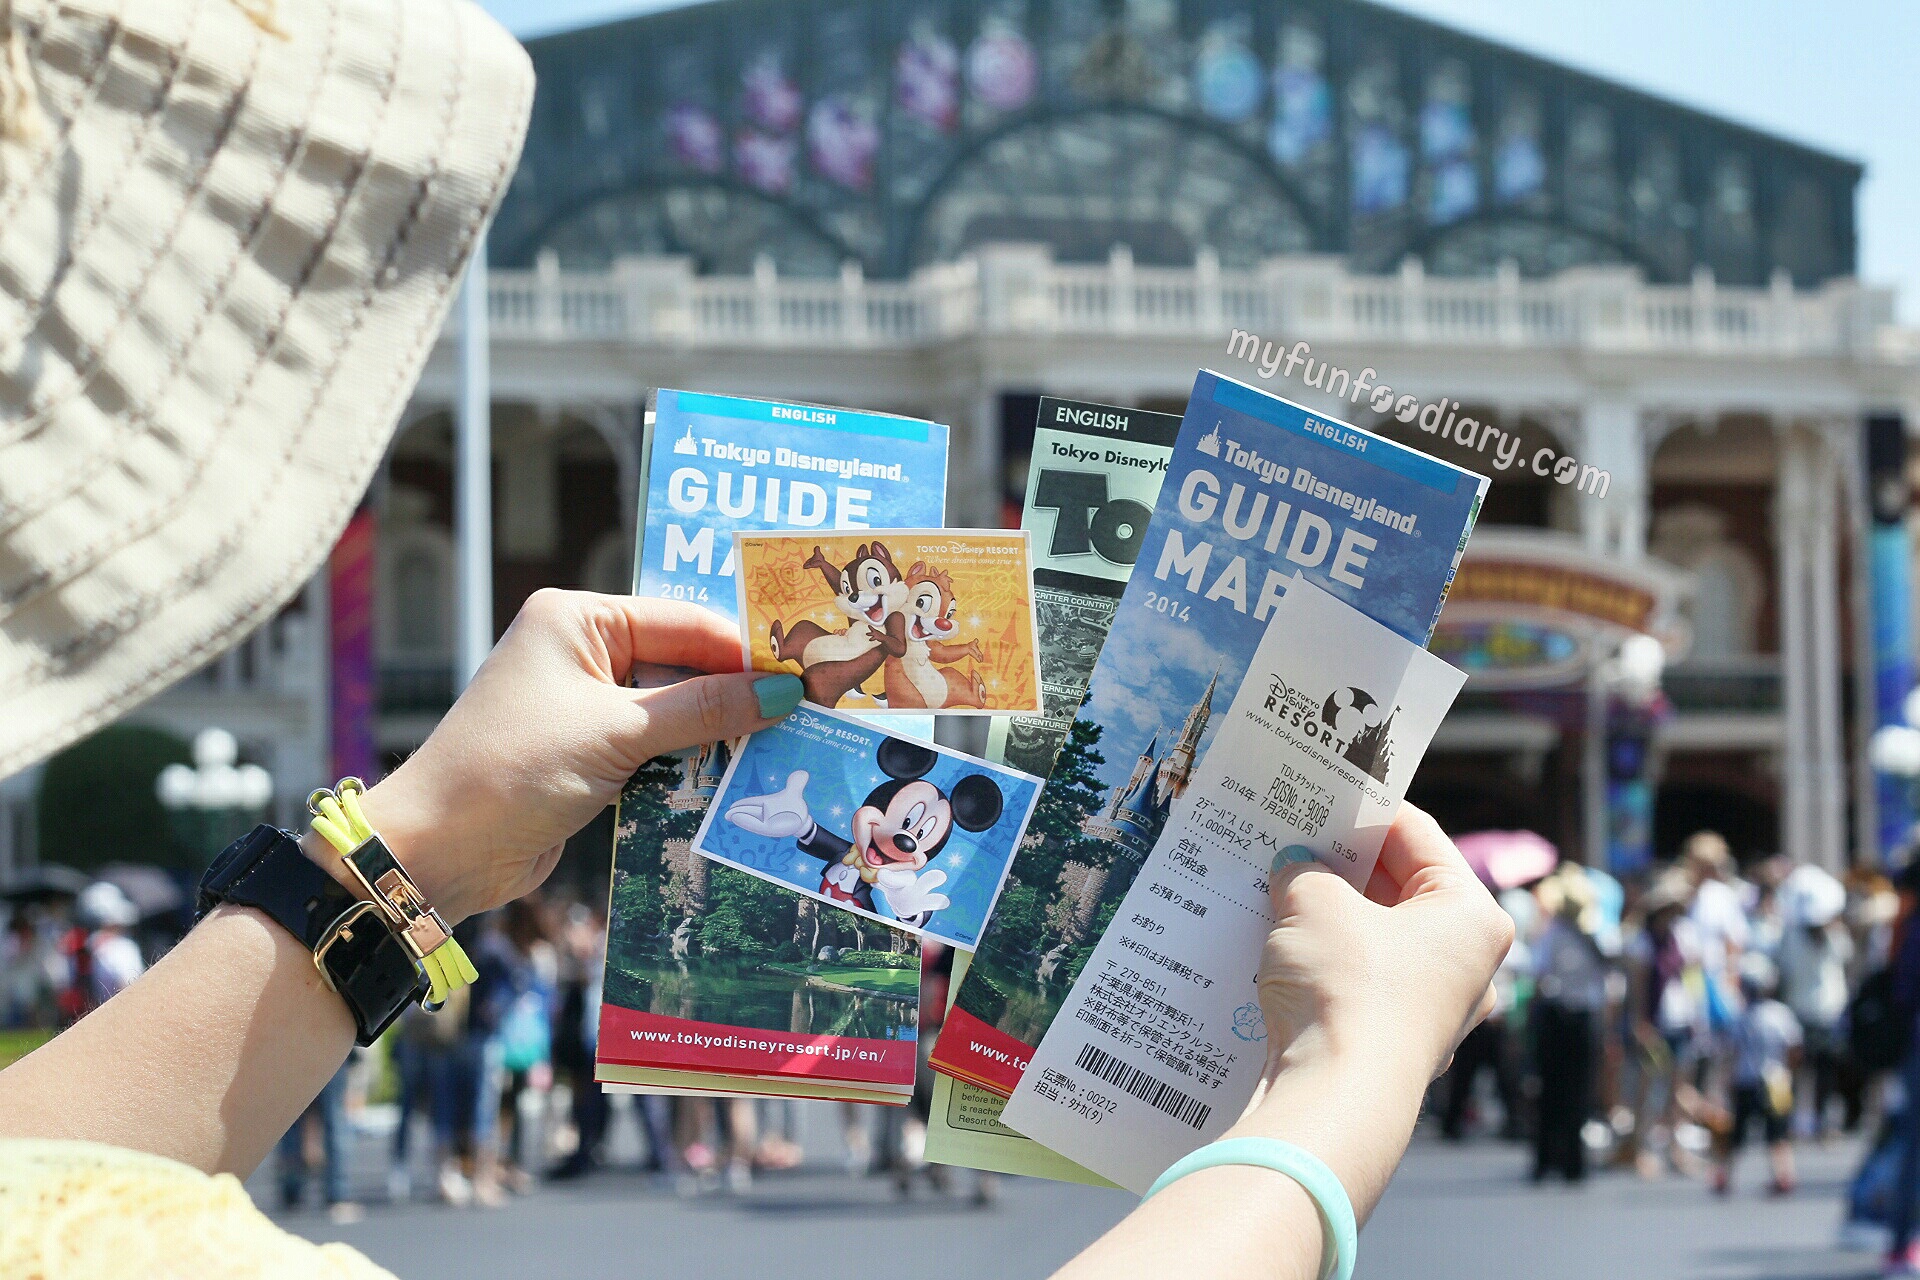 Yeay We Got Our Tokyo Disneyland Tickets and Tokyo Disneysea - by Myfunfoodiary